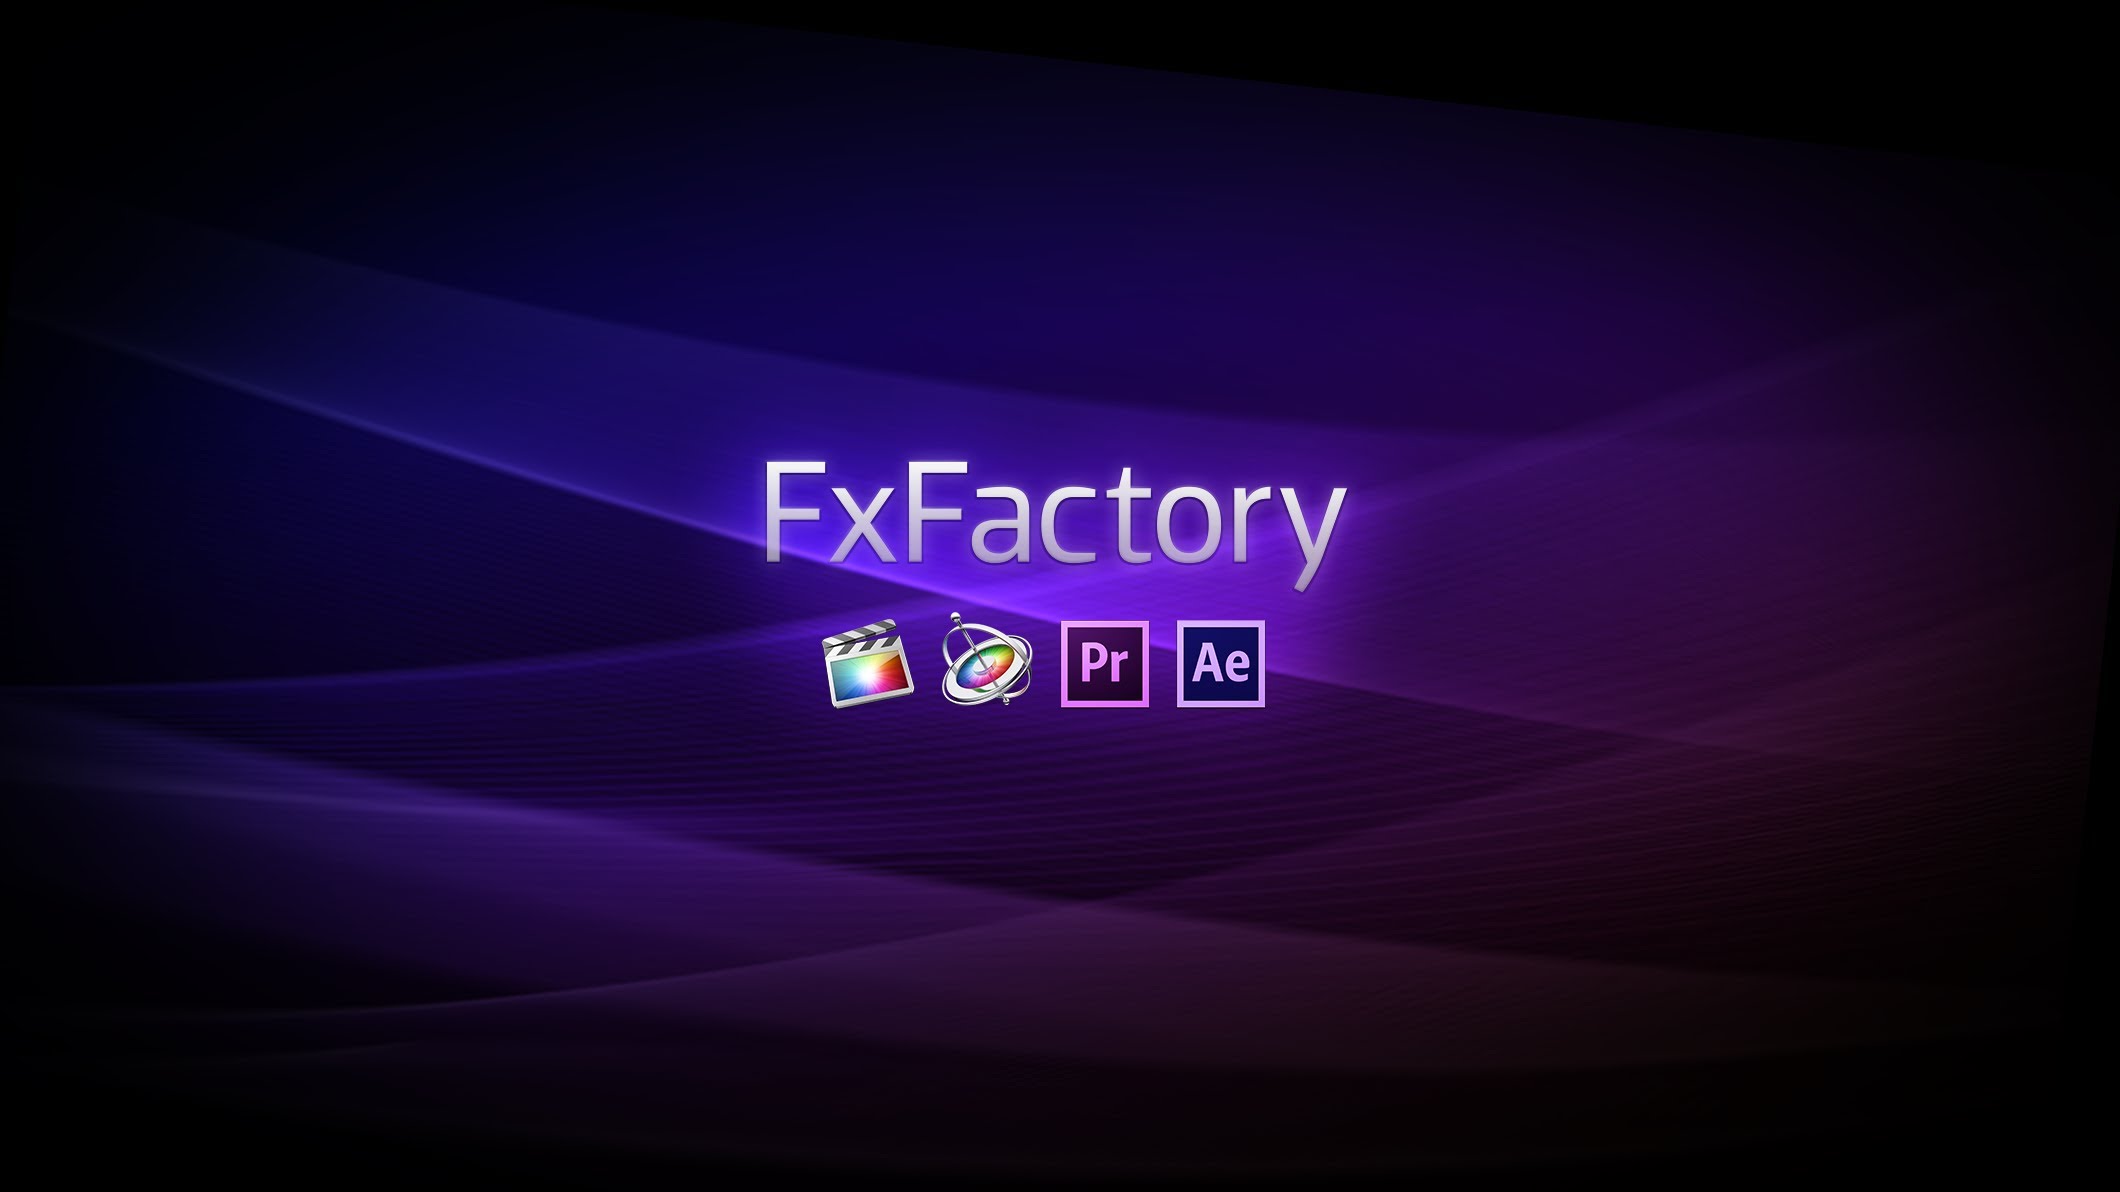 FxFactory Pro 7.1.2 download free